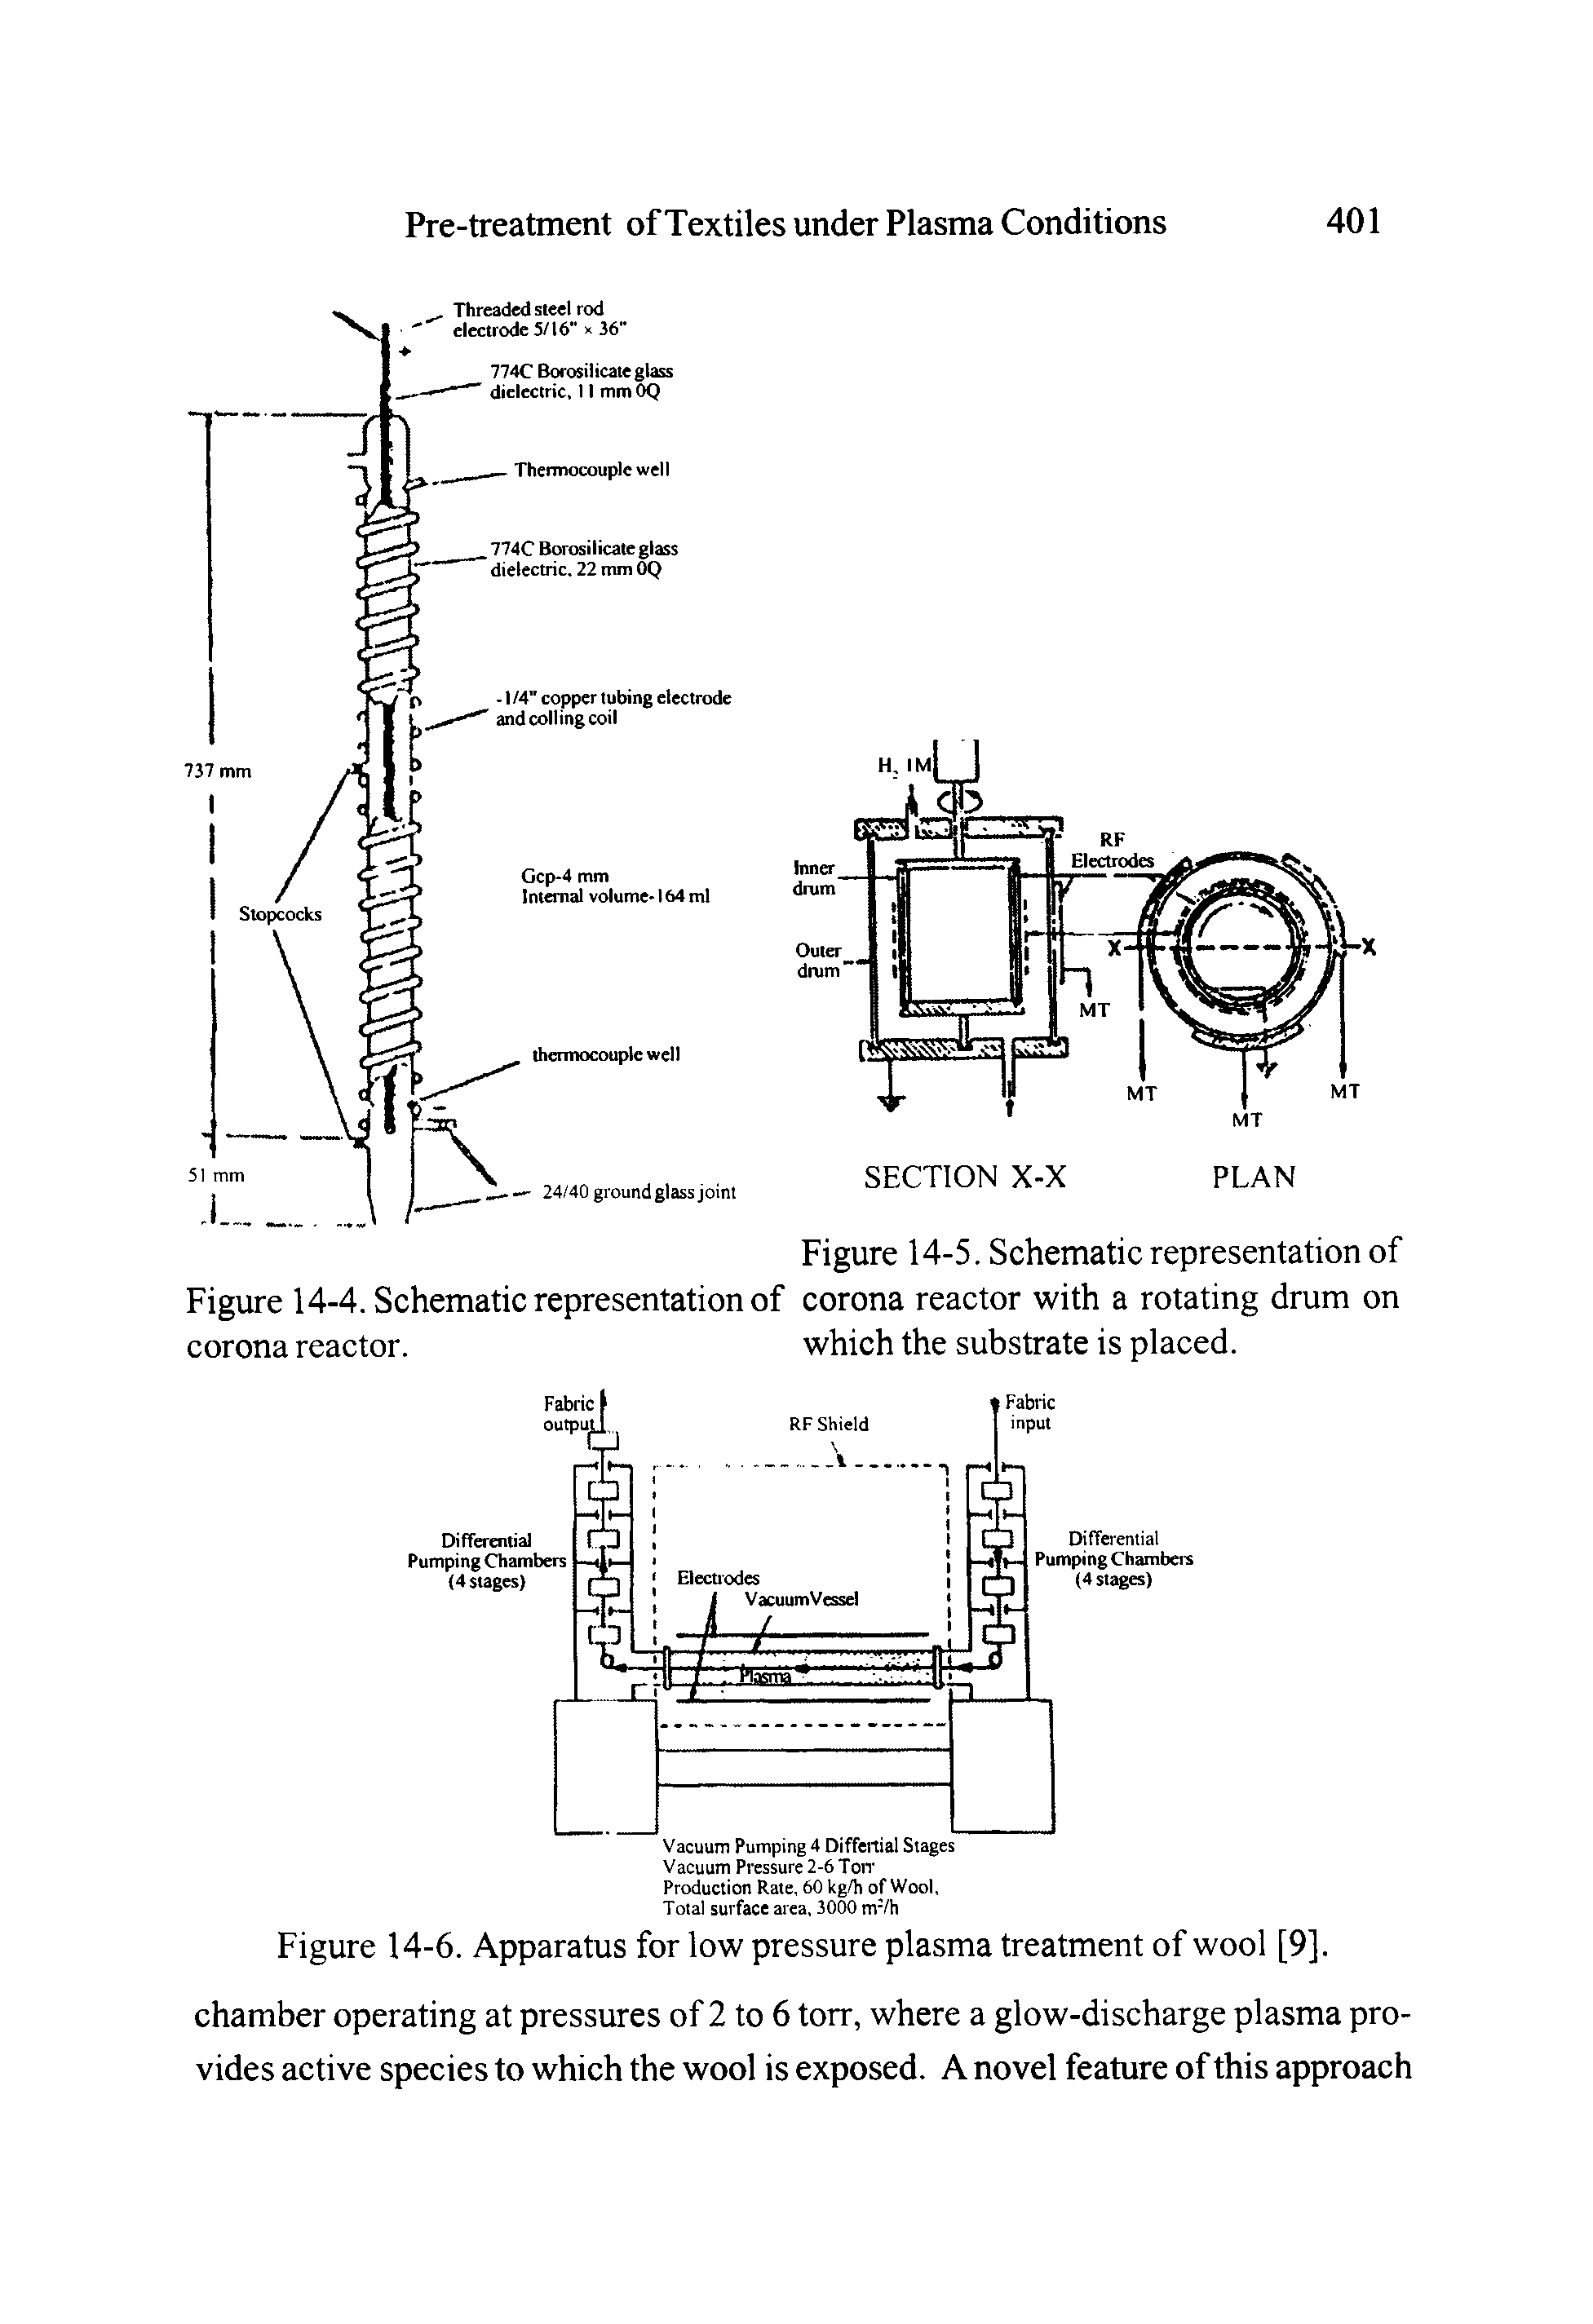 Figure 14-6. Apparatus for low pressure plasma treatment of wool [9].